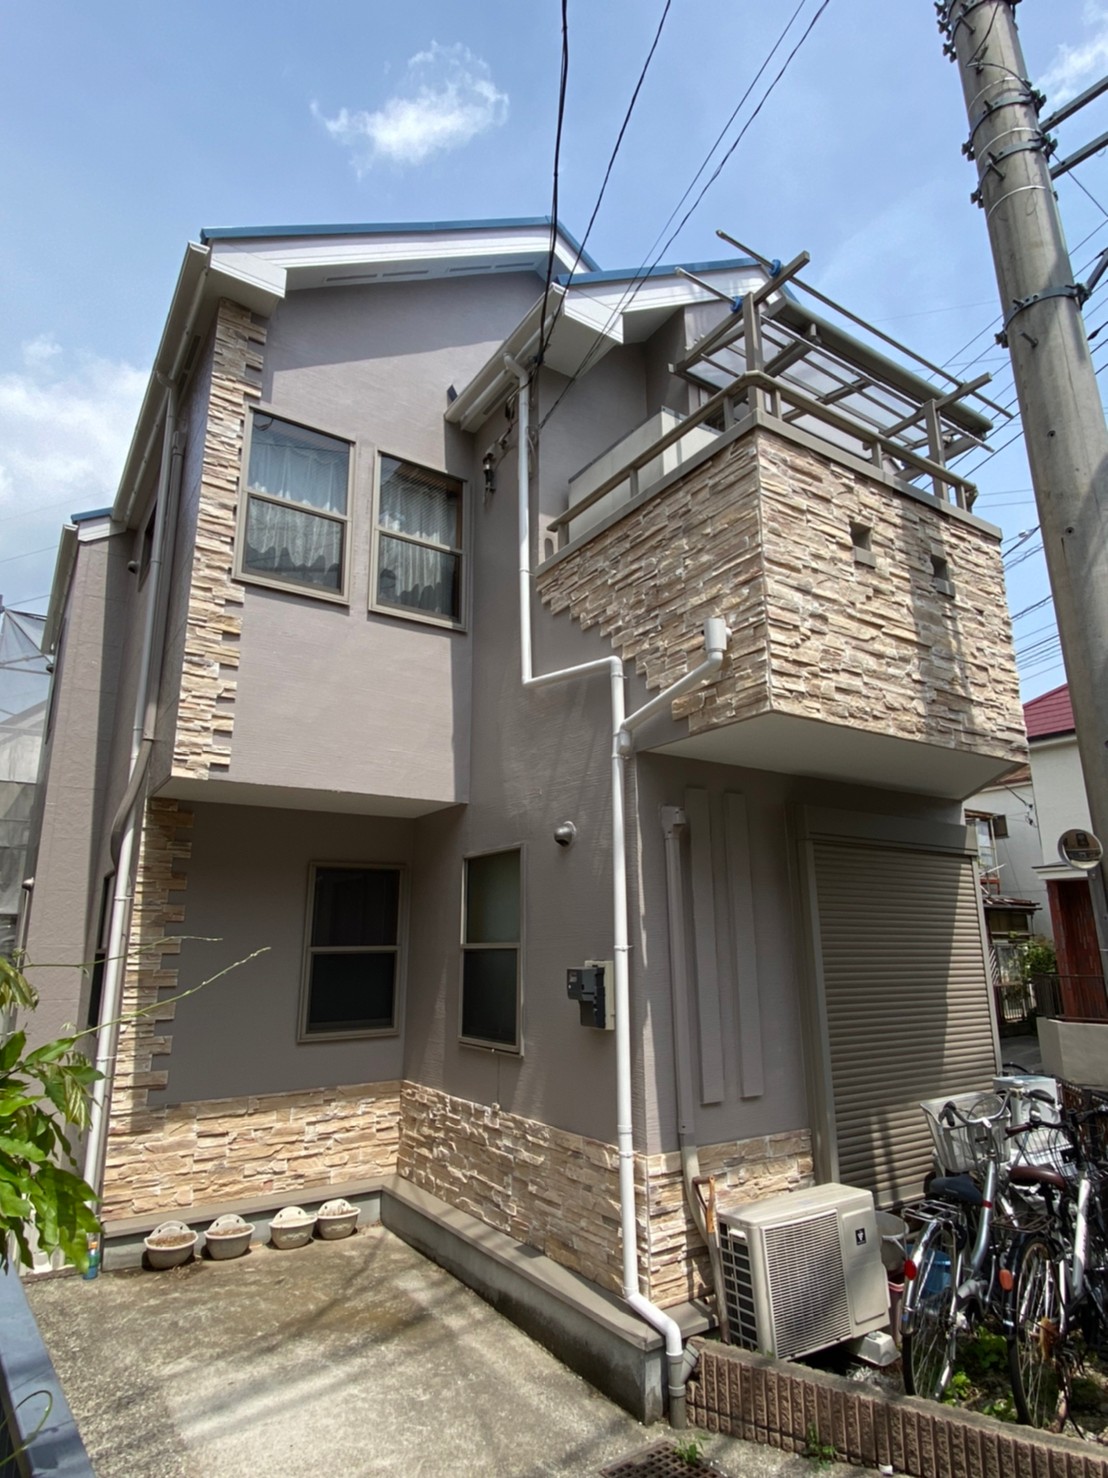 横浜市港北区F様邸|外壁塗装|施工後|モルタル|外観|グレー2